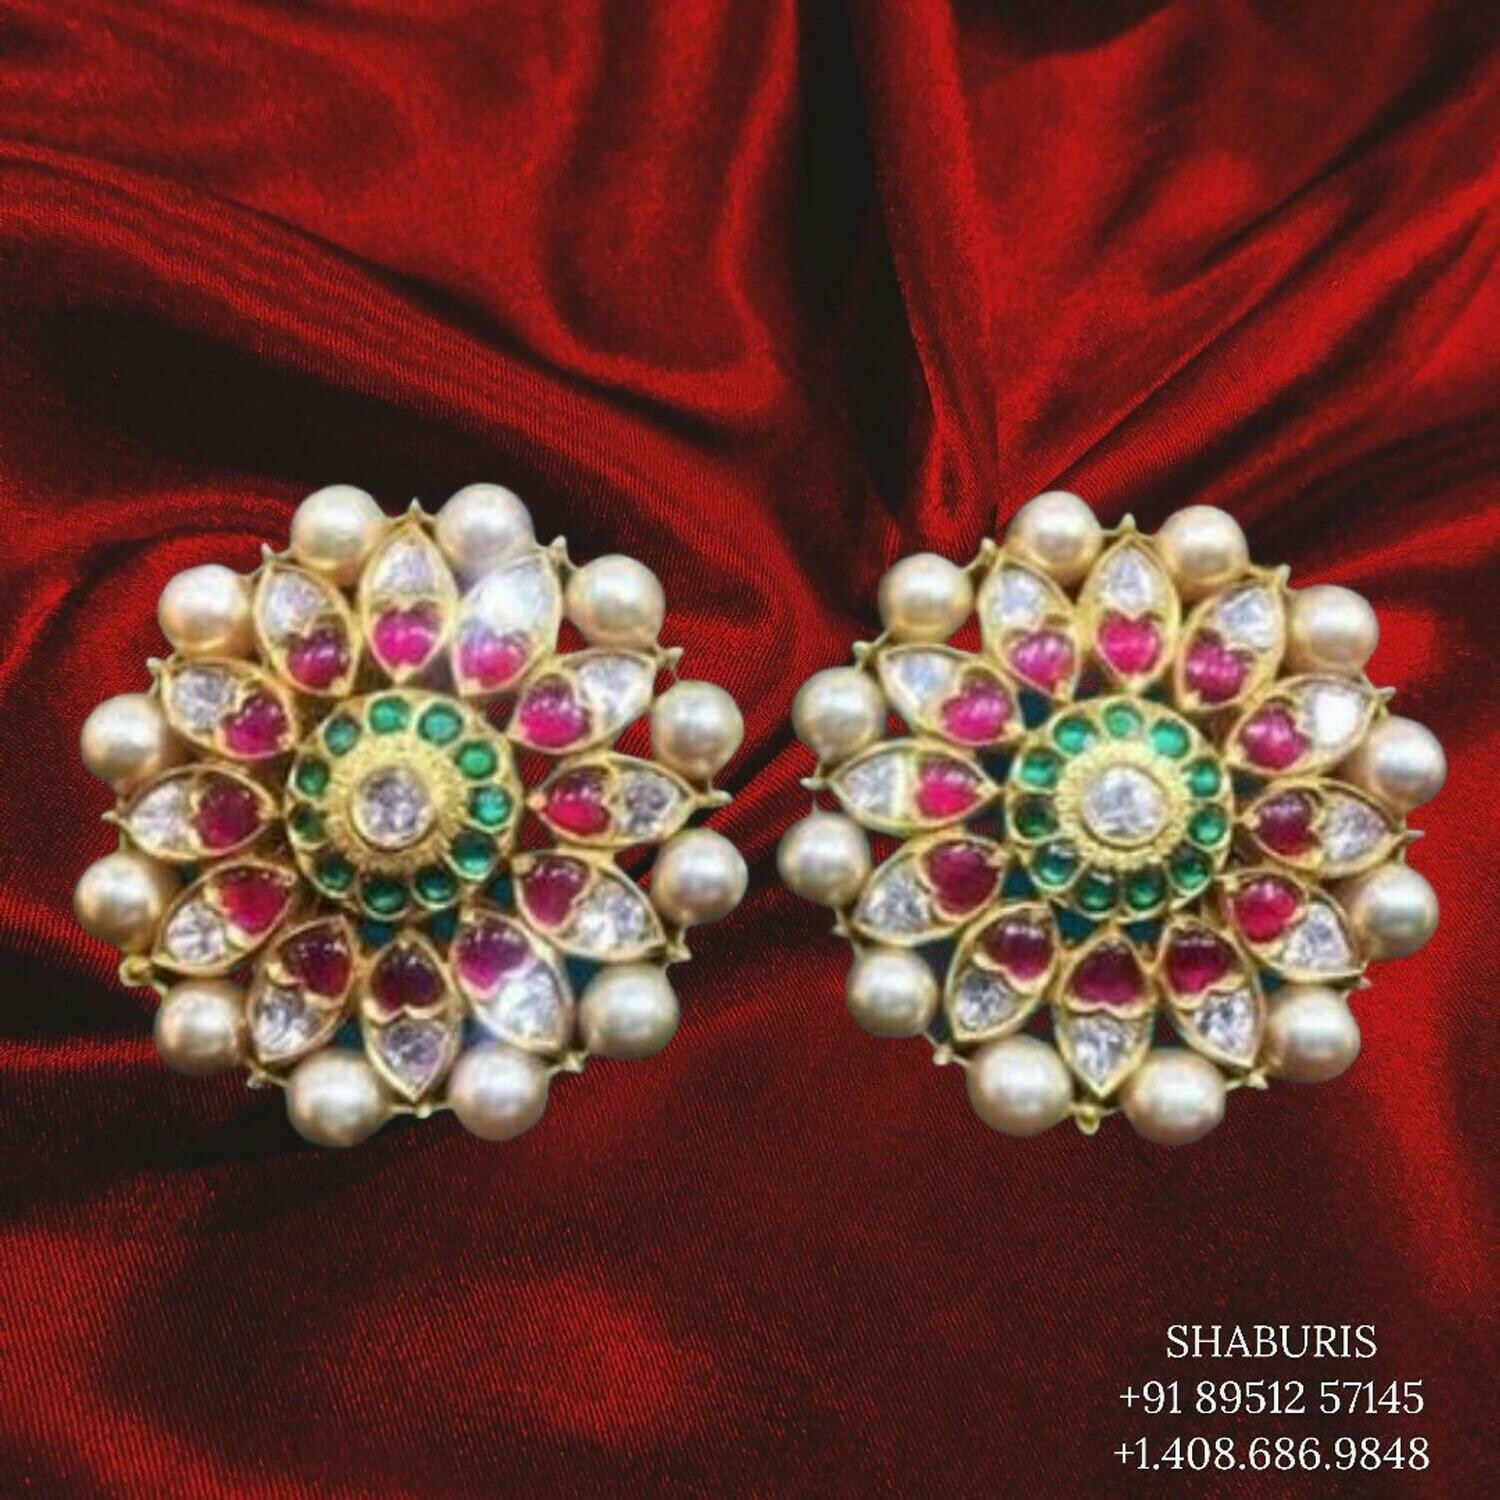 South Indian Jewelry,Pure Silver Jewellery Indian ,Earrings,Big Indian earrings,Indian Bridal,Indian Wedding Jewelry-NIHIRA-SHABURIS